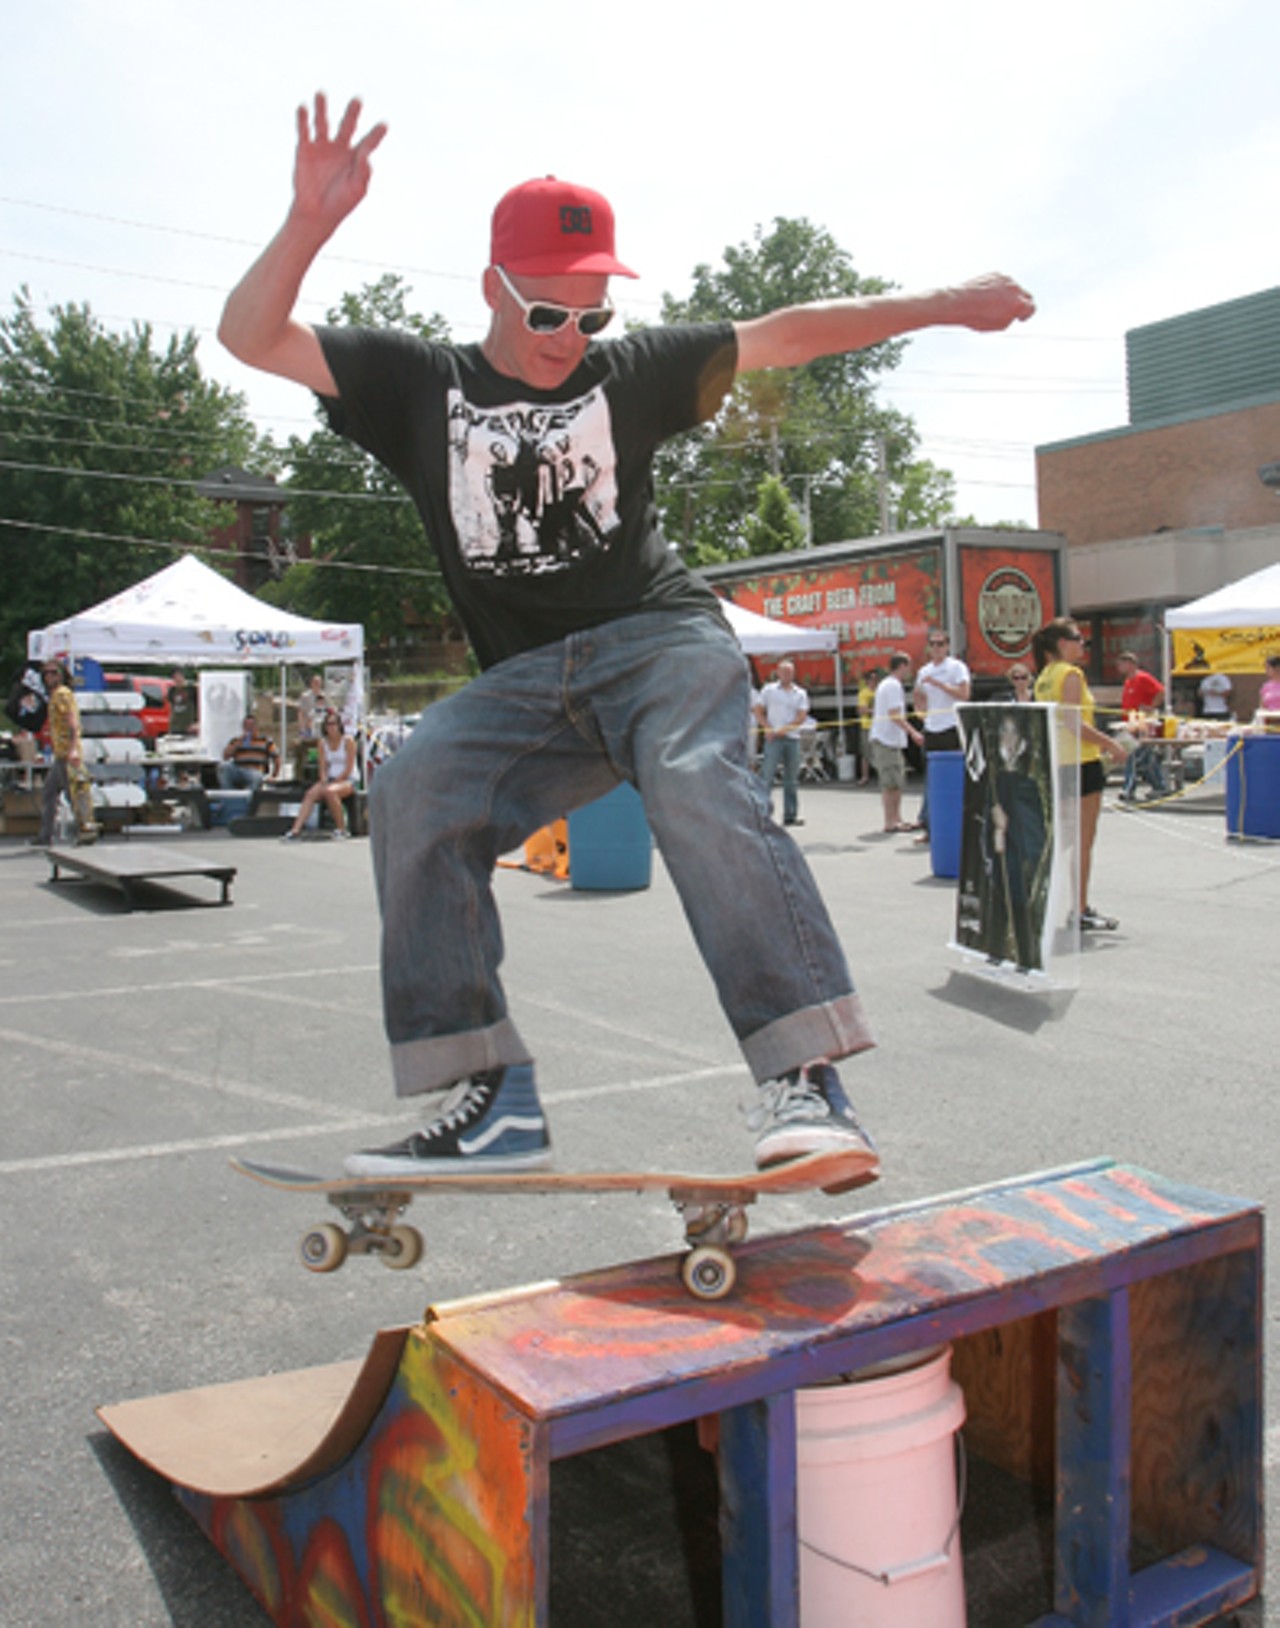 James Reidelberger does skateboarding tricks Sunday in the Loop. He has been skateboarding for 23 years.